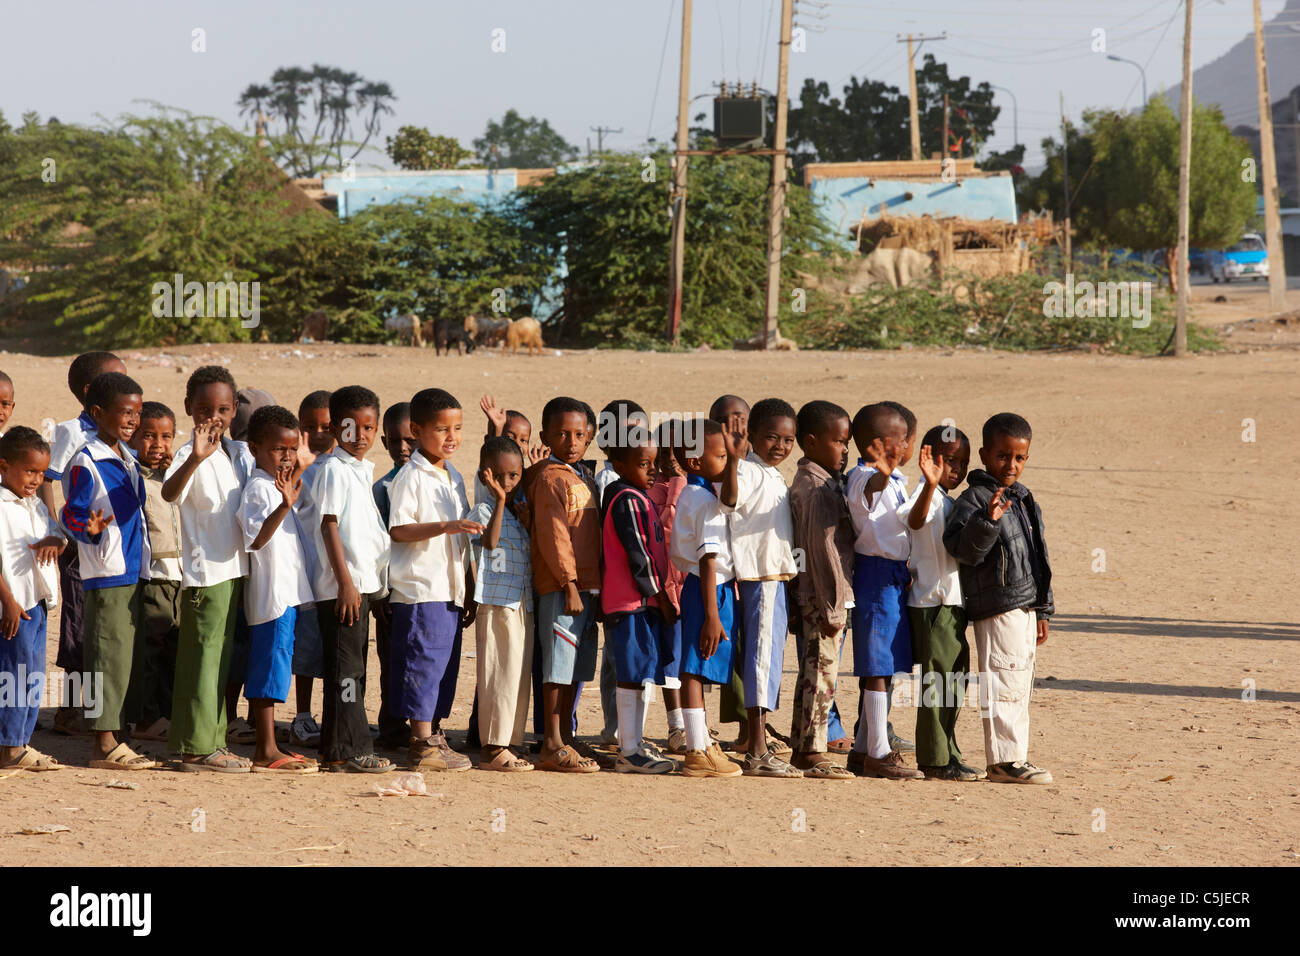 School children, El Khatmiyah Town, Northern Sudan, Africa Stock Photo